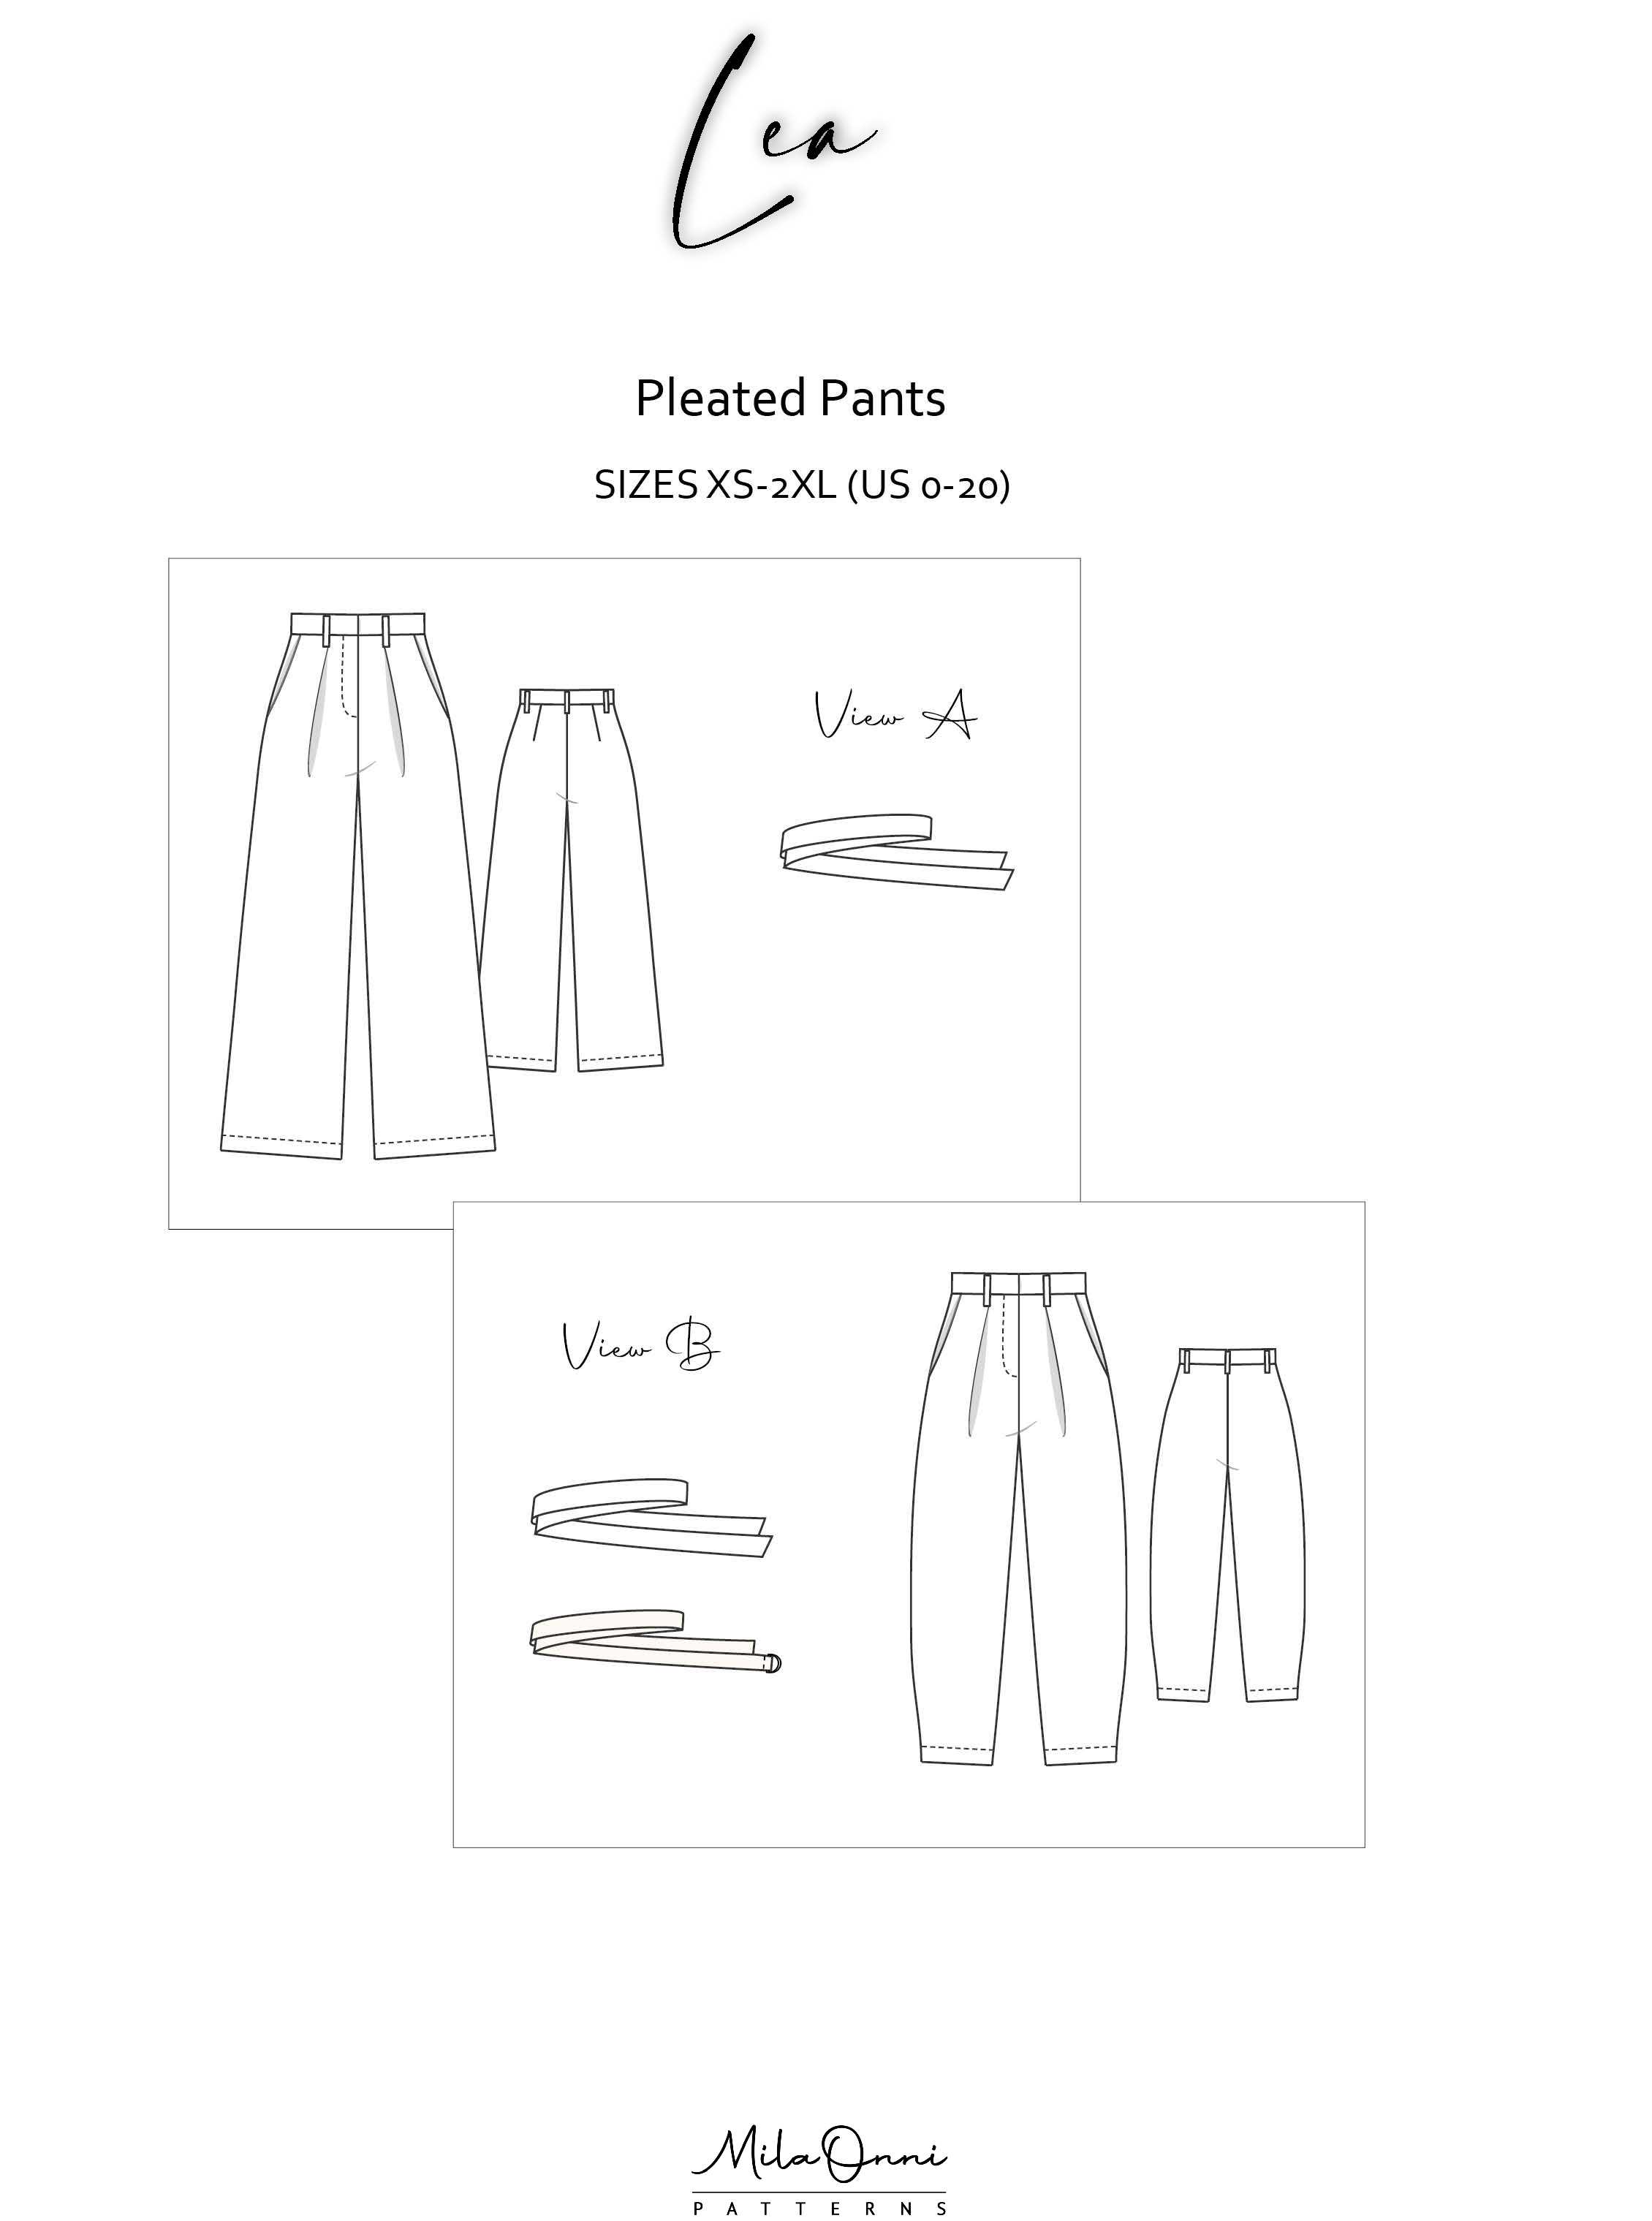 Pattern Construction for Pleated Pants  MMueller  Sohn